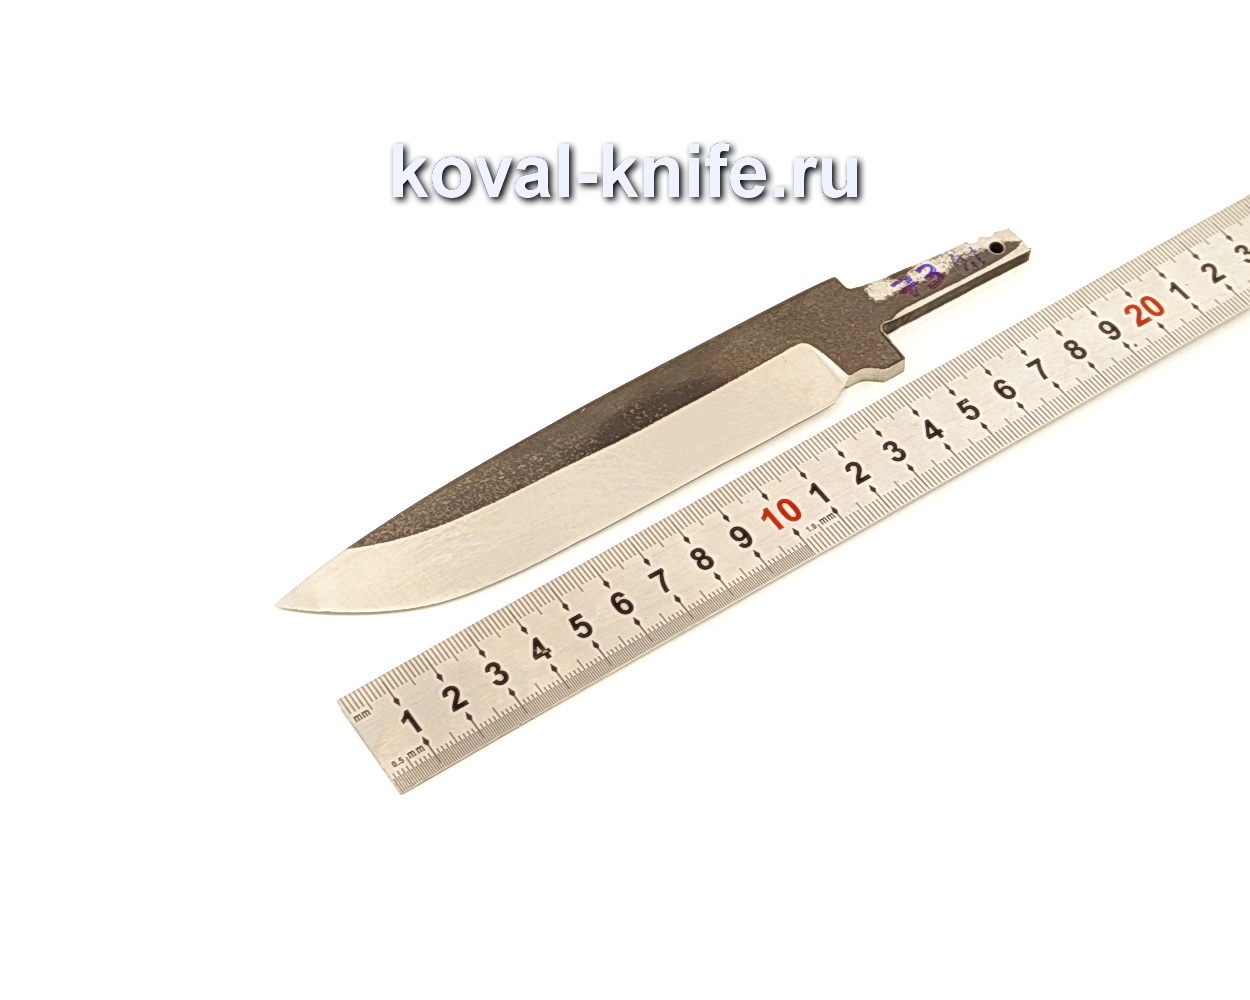 Клинок для ножа из кованой 95Х18 N73